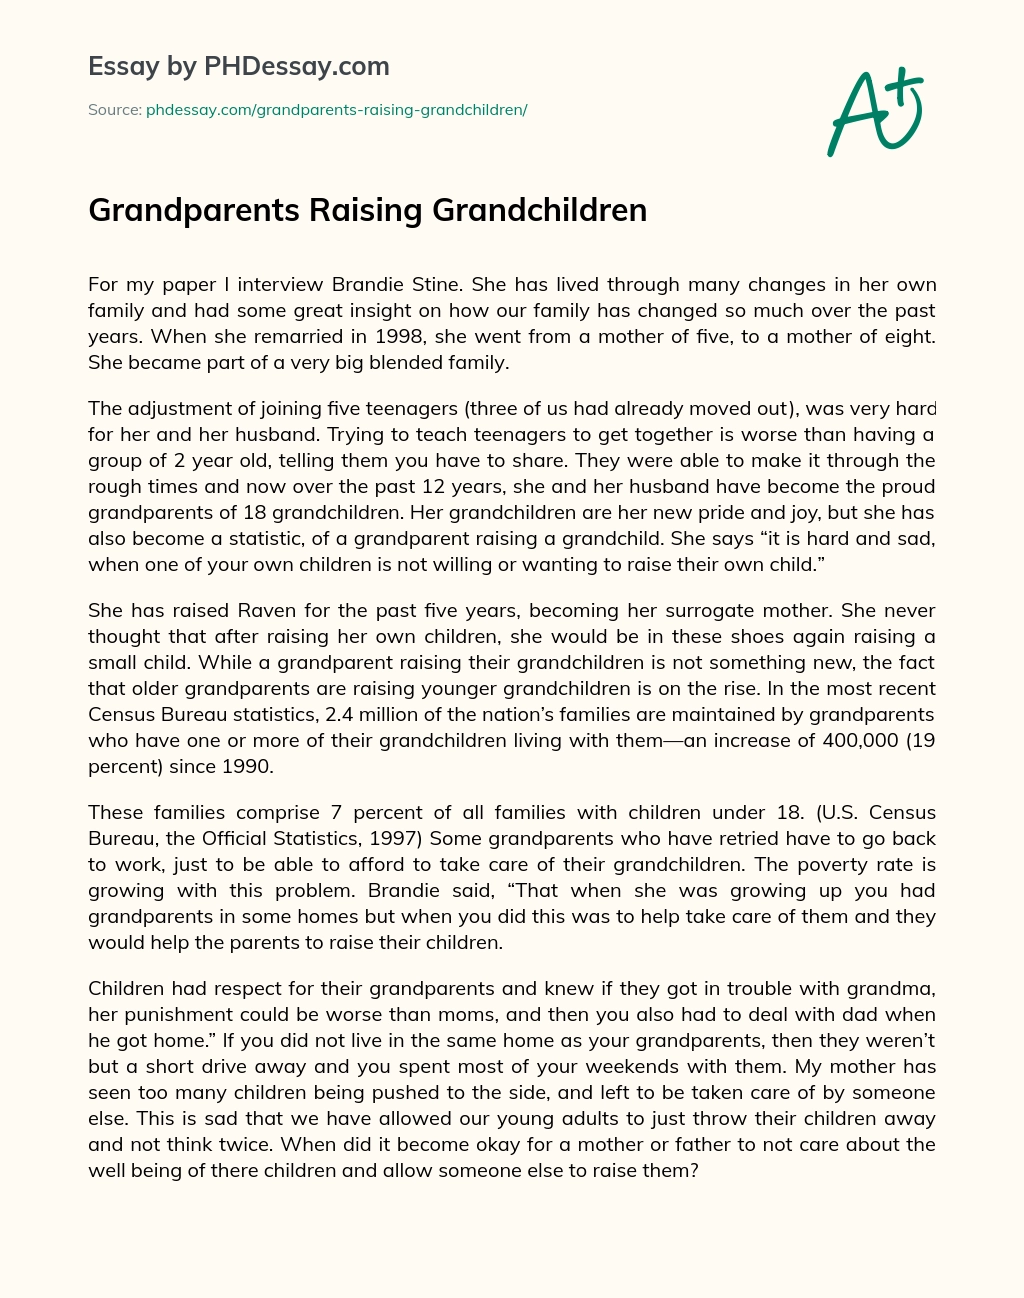 Grandparents Raising Grandchildren essay